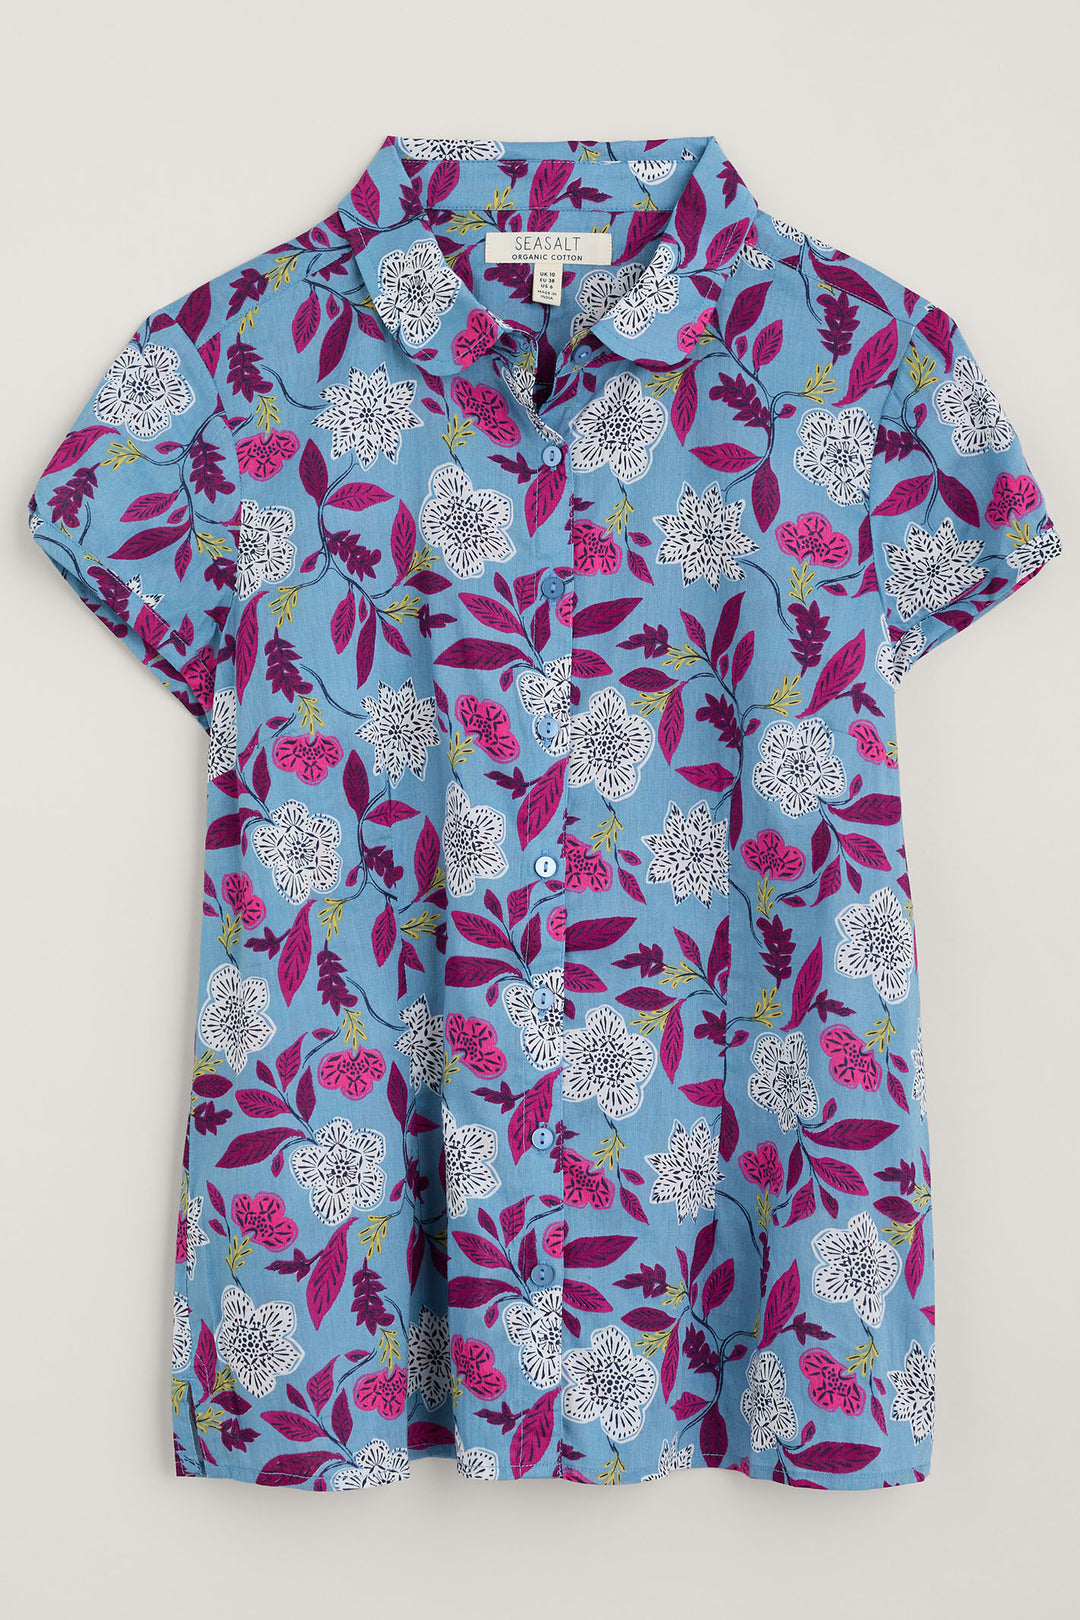 Seasalt Rushmaker Blue Stone Flower Saltwater Print Shirt - Shirley Allum Boutique